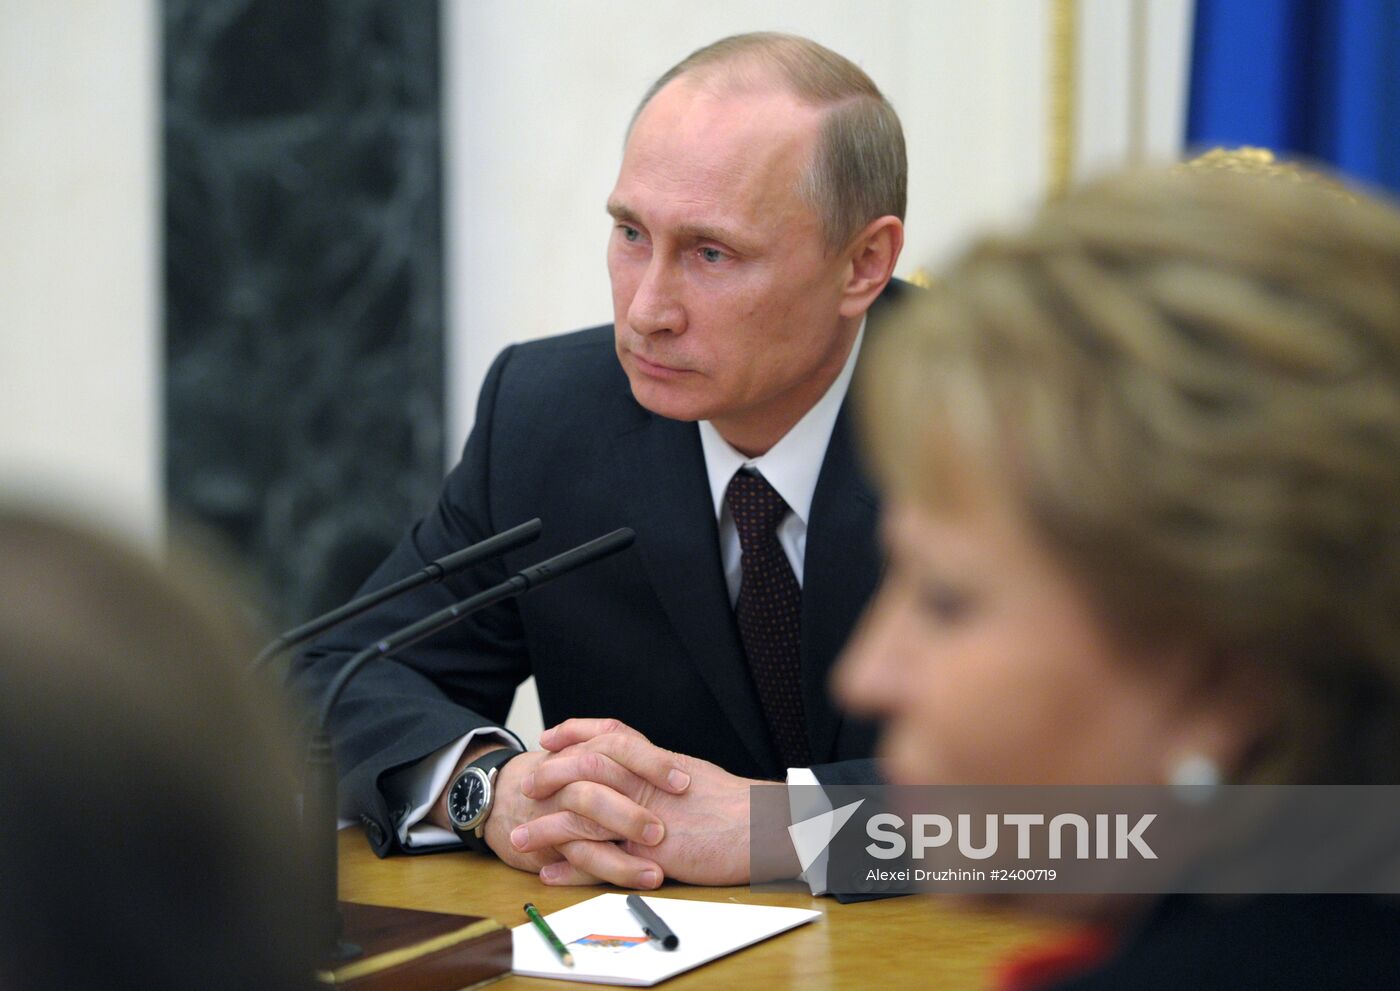 Vladimir Putin holds Russian Security Council meeting